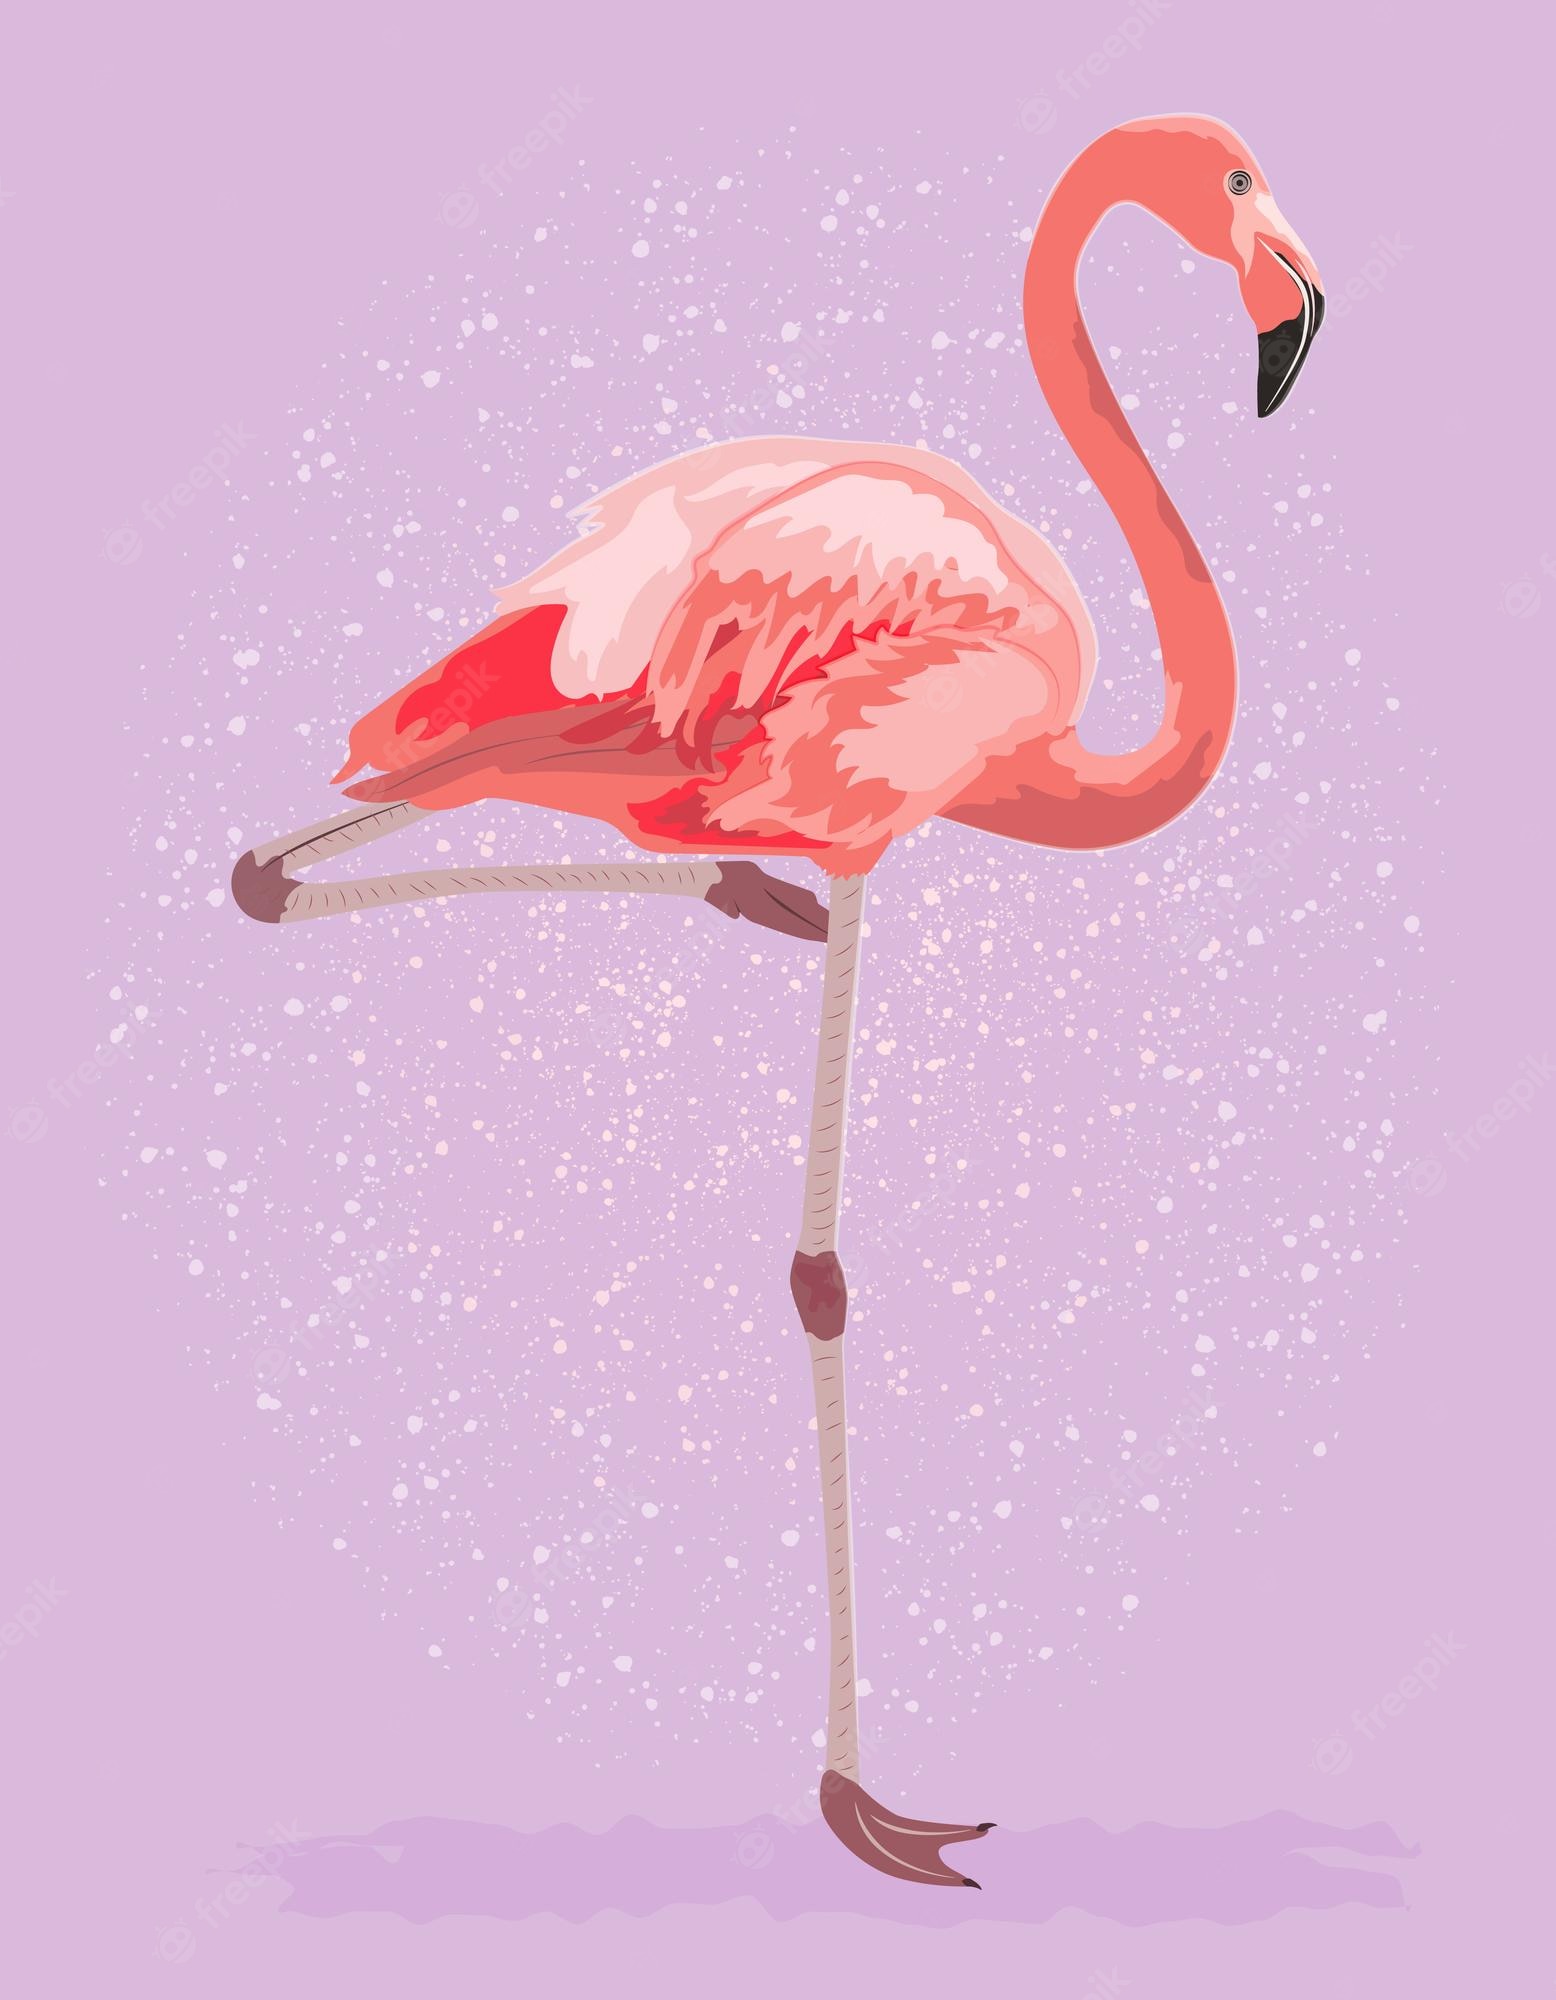 Vintage Flamingo Image